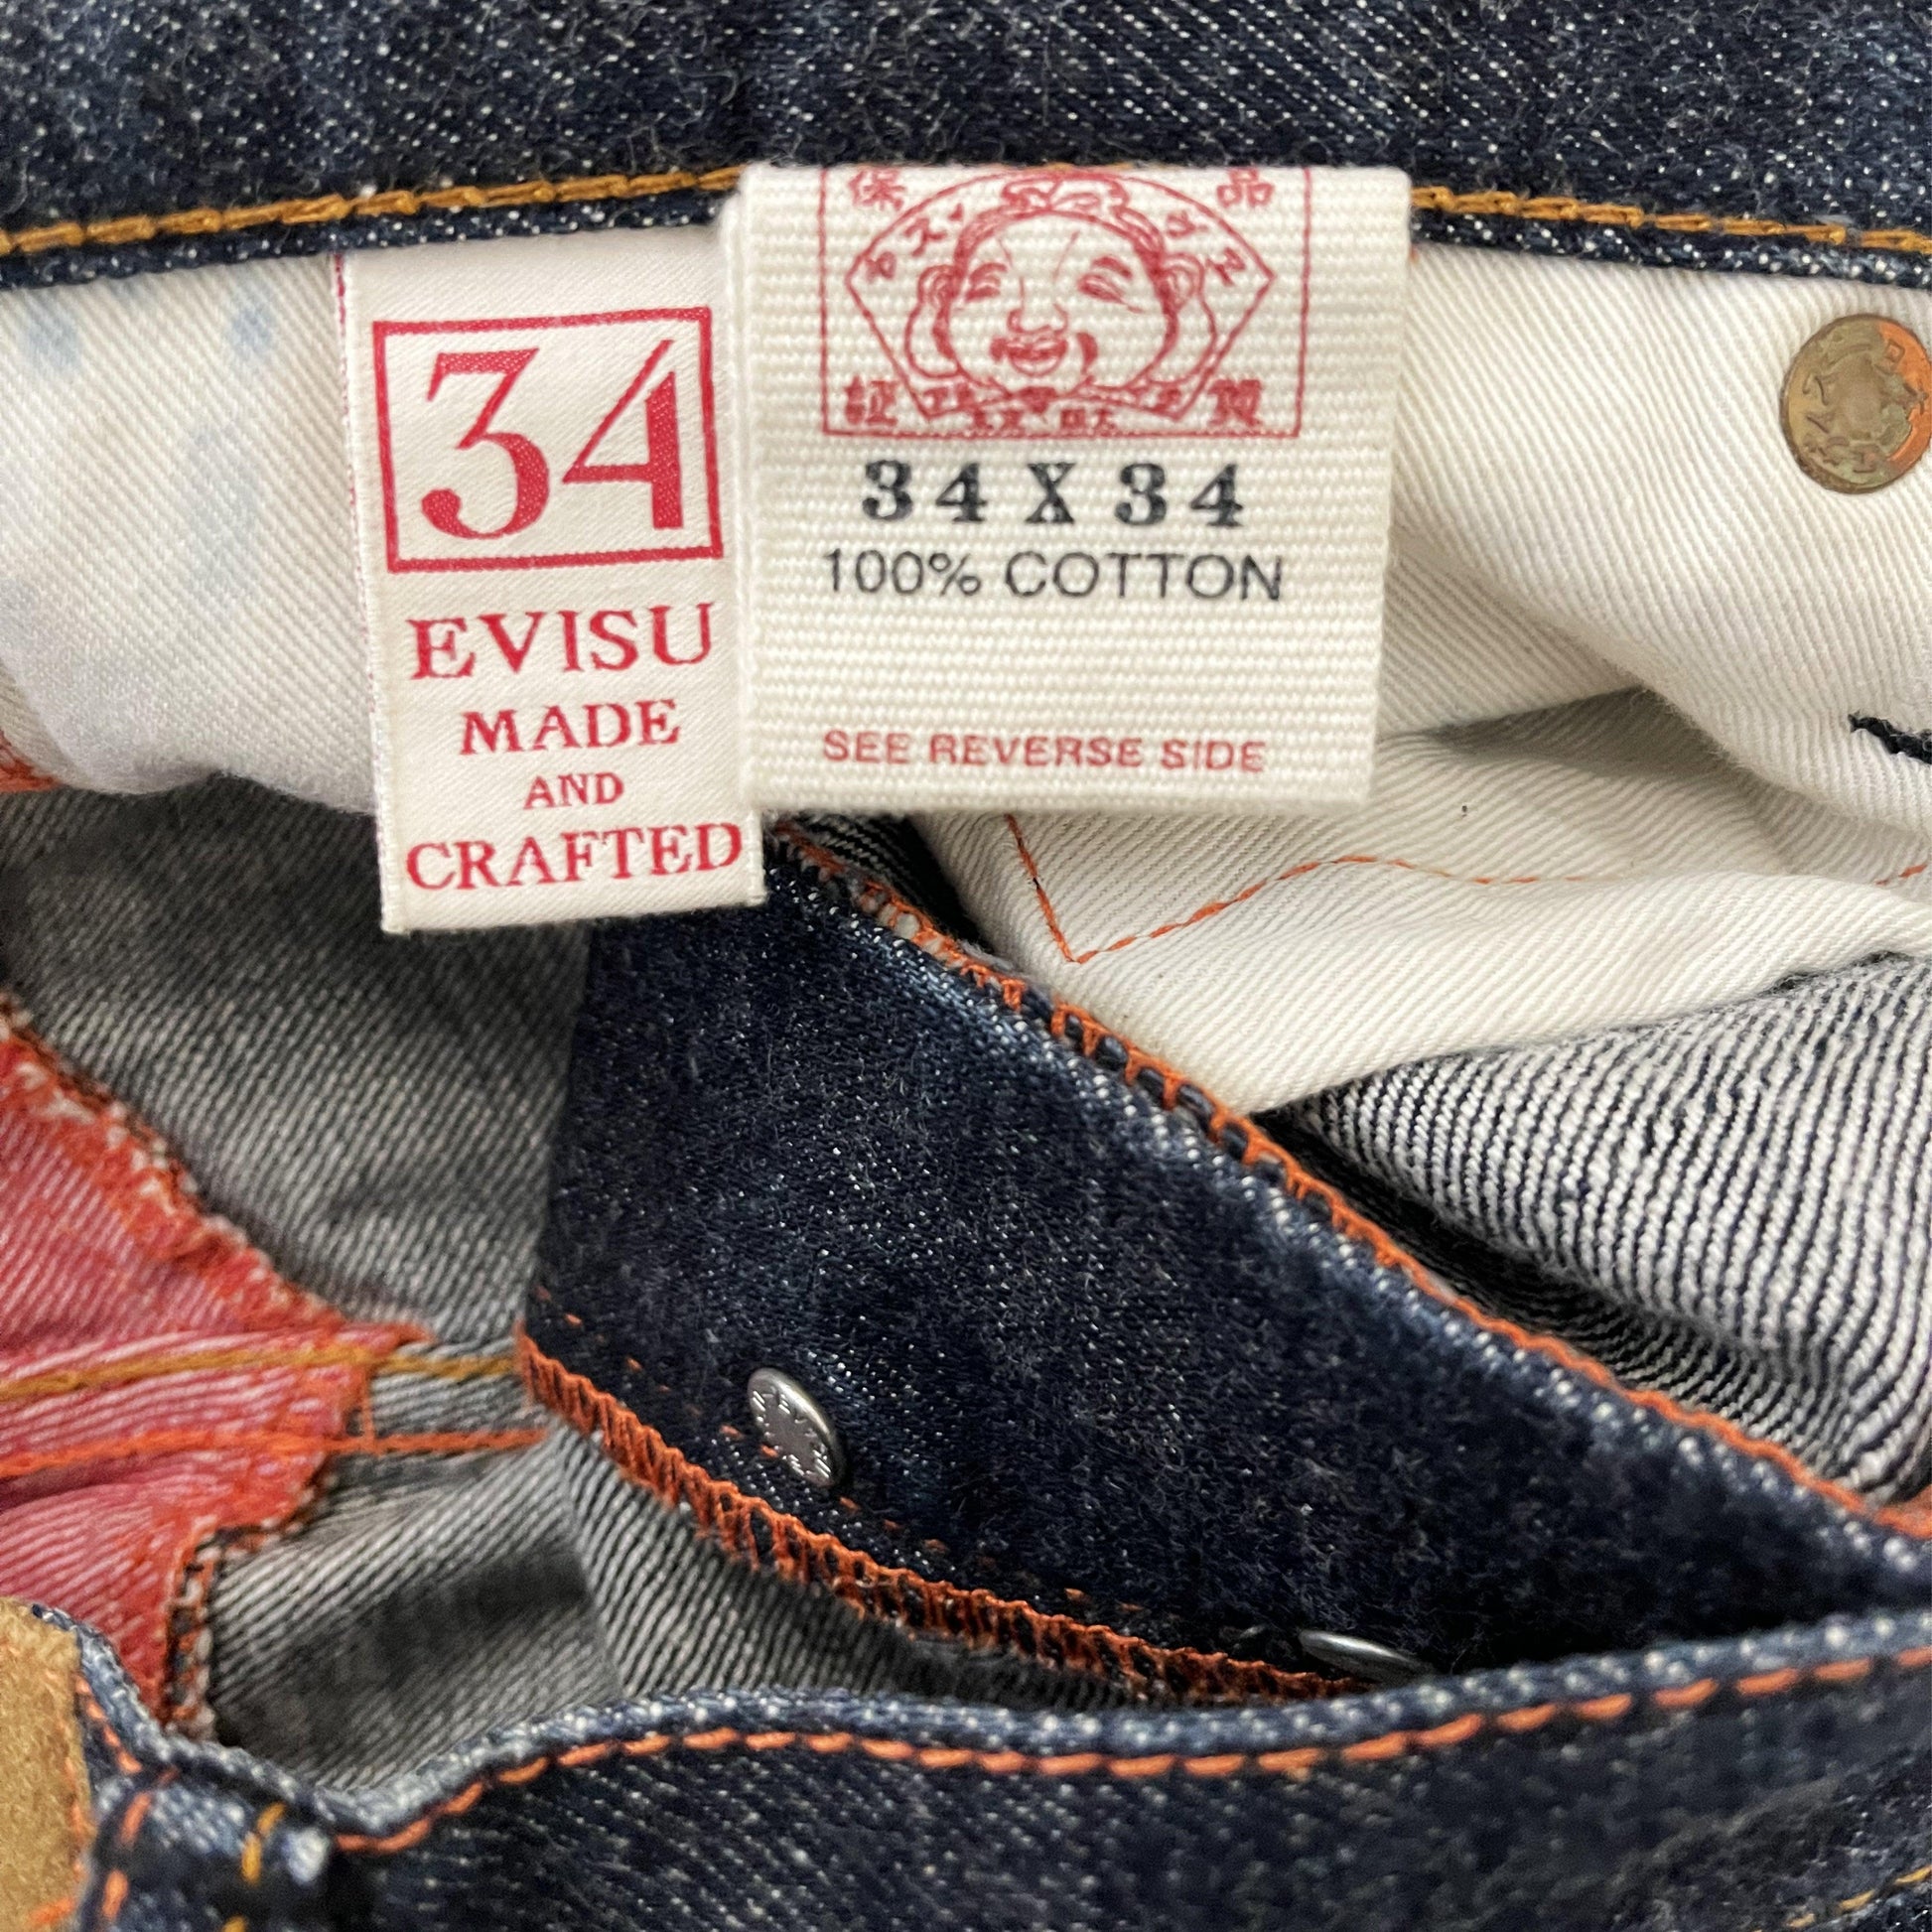 Evisu Paris Daicock Jeans - Known Source